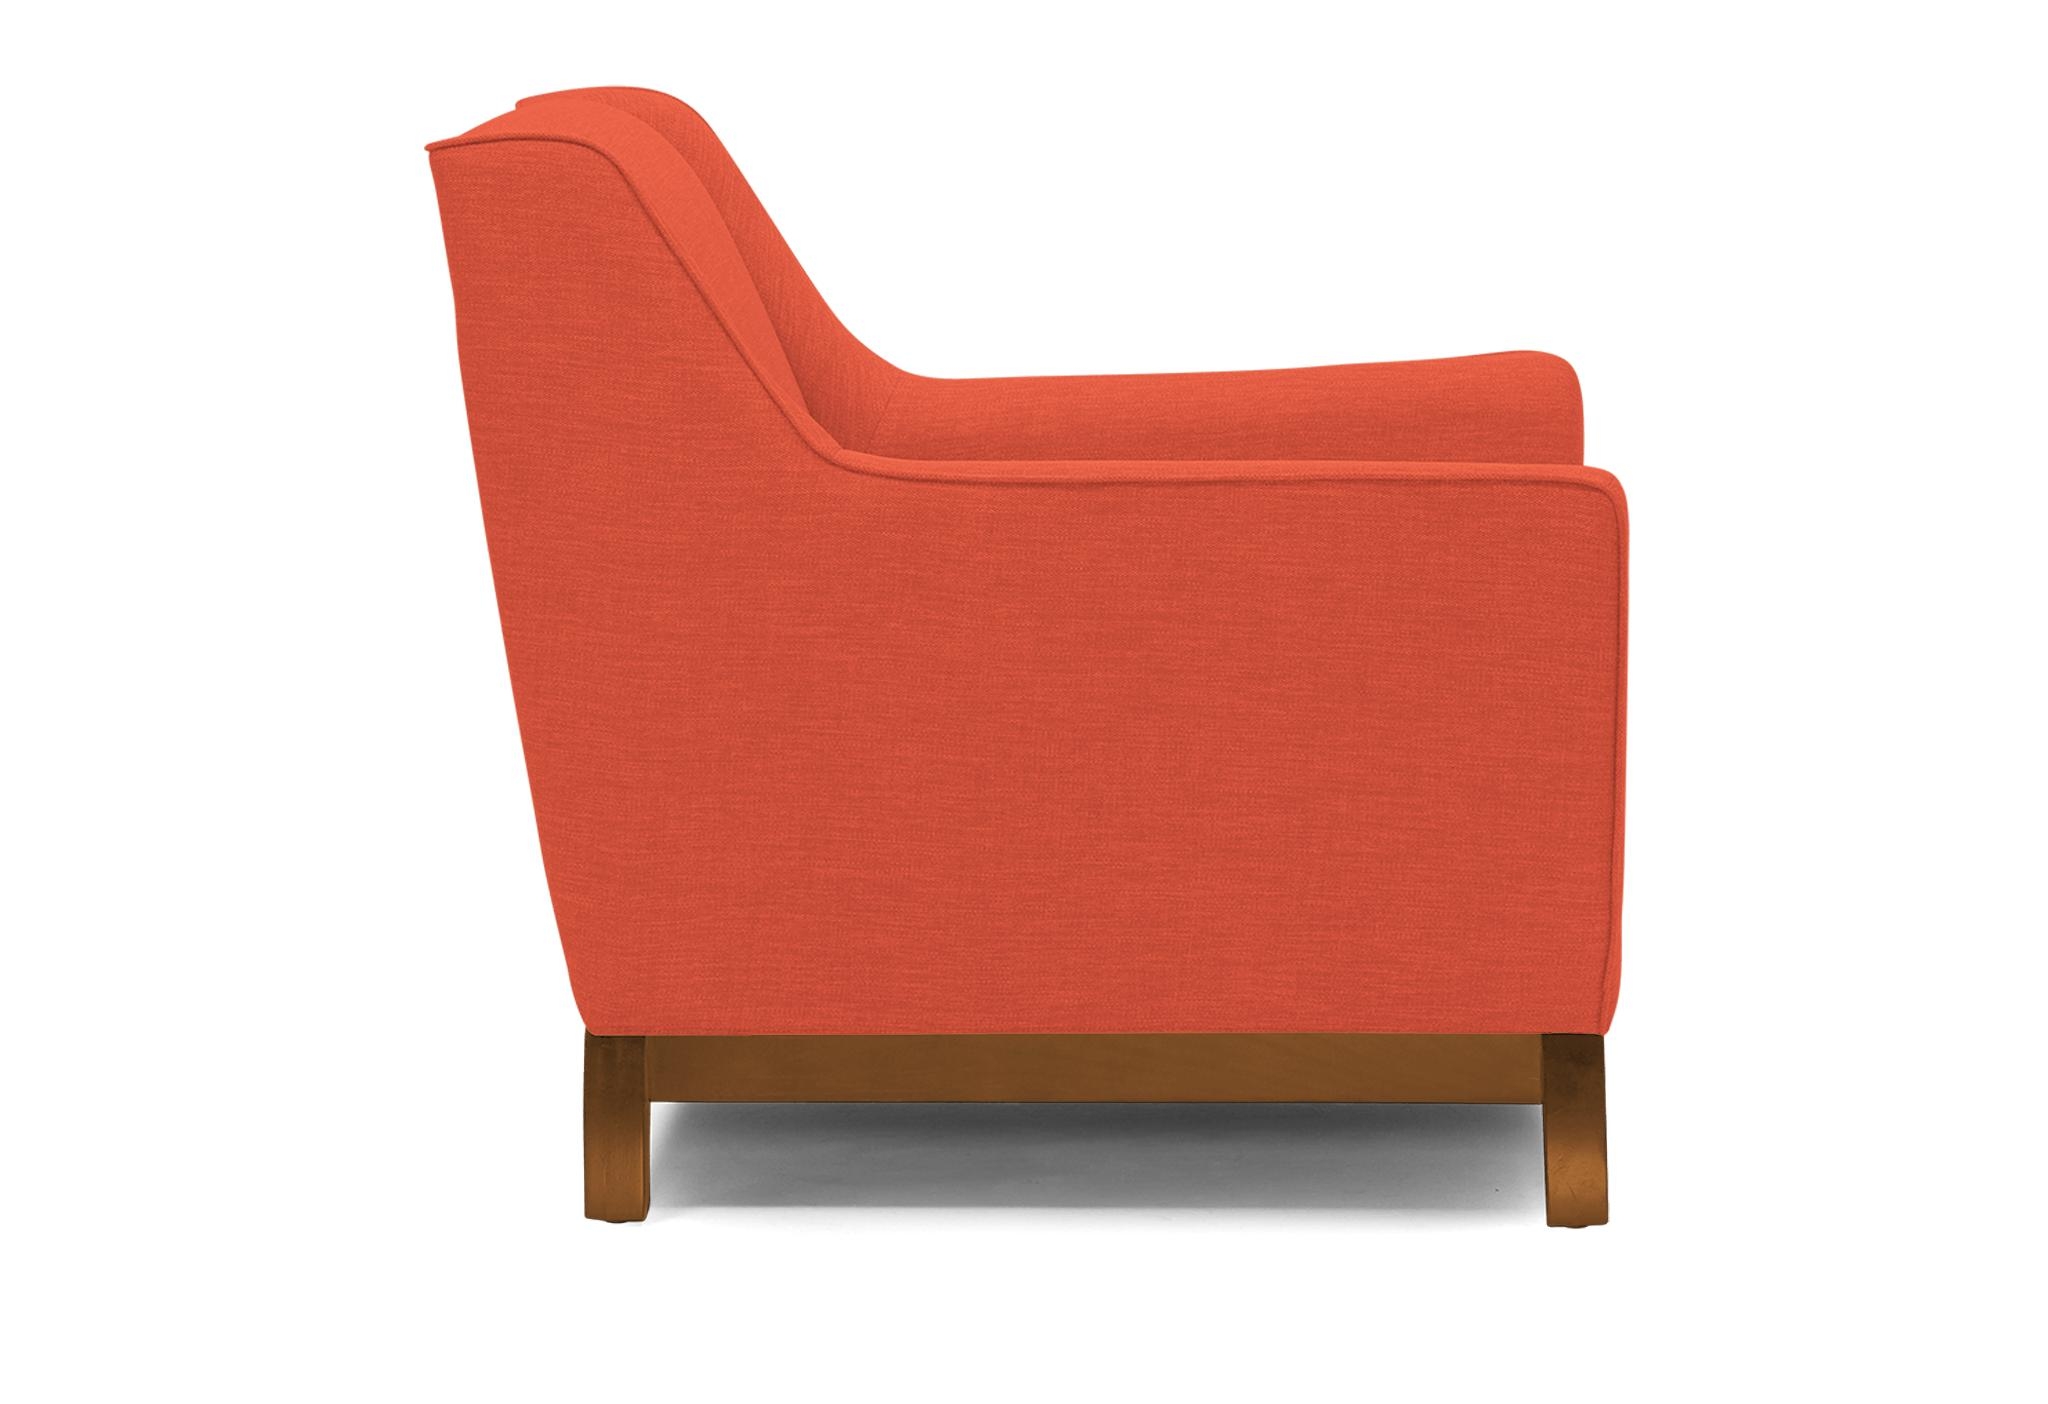 Orange Owen Mid Century Modern Chair - Key Largo Coral - Mocha - Image 2